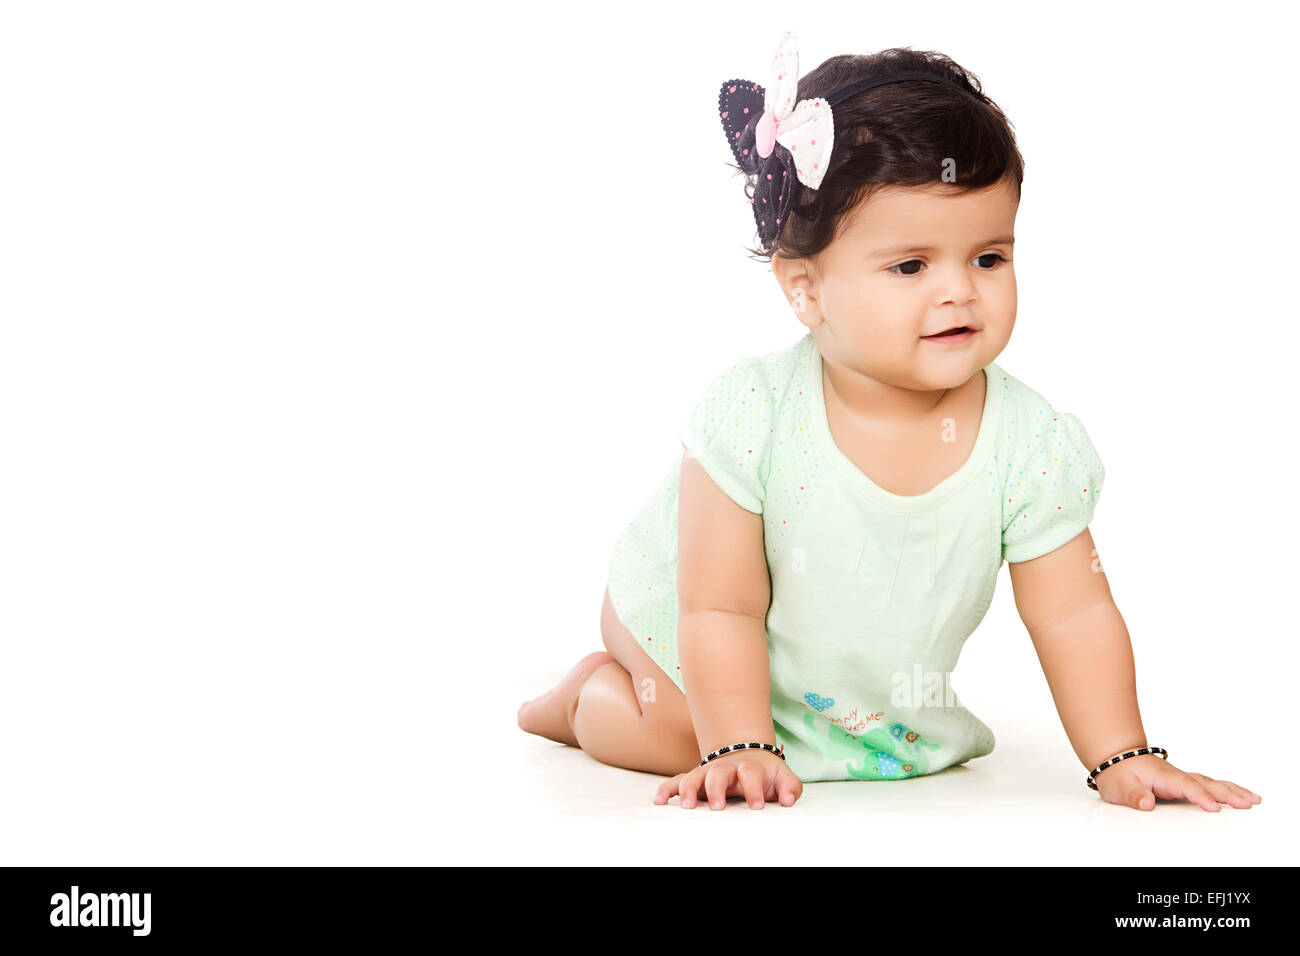 1 indian Beautiful baby Stock Photo